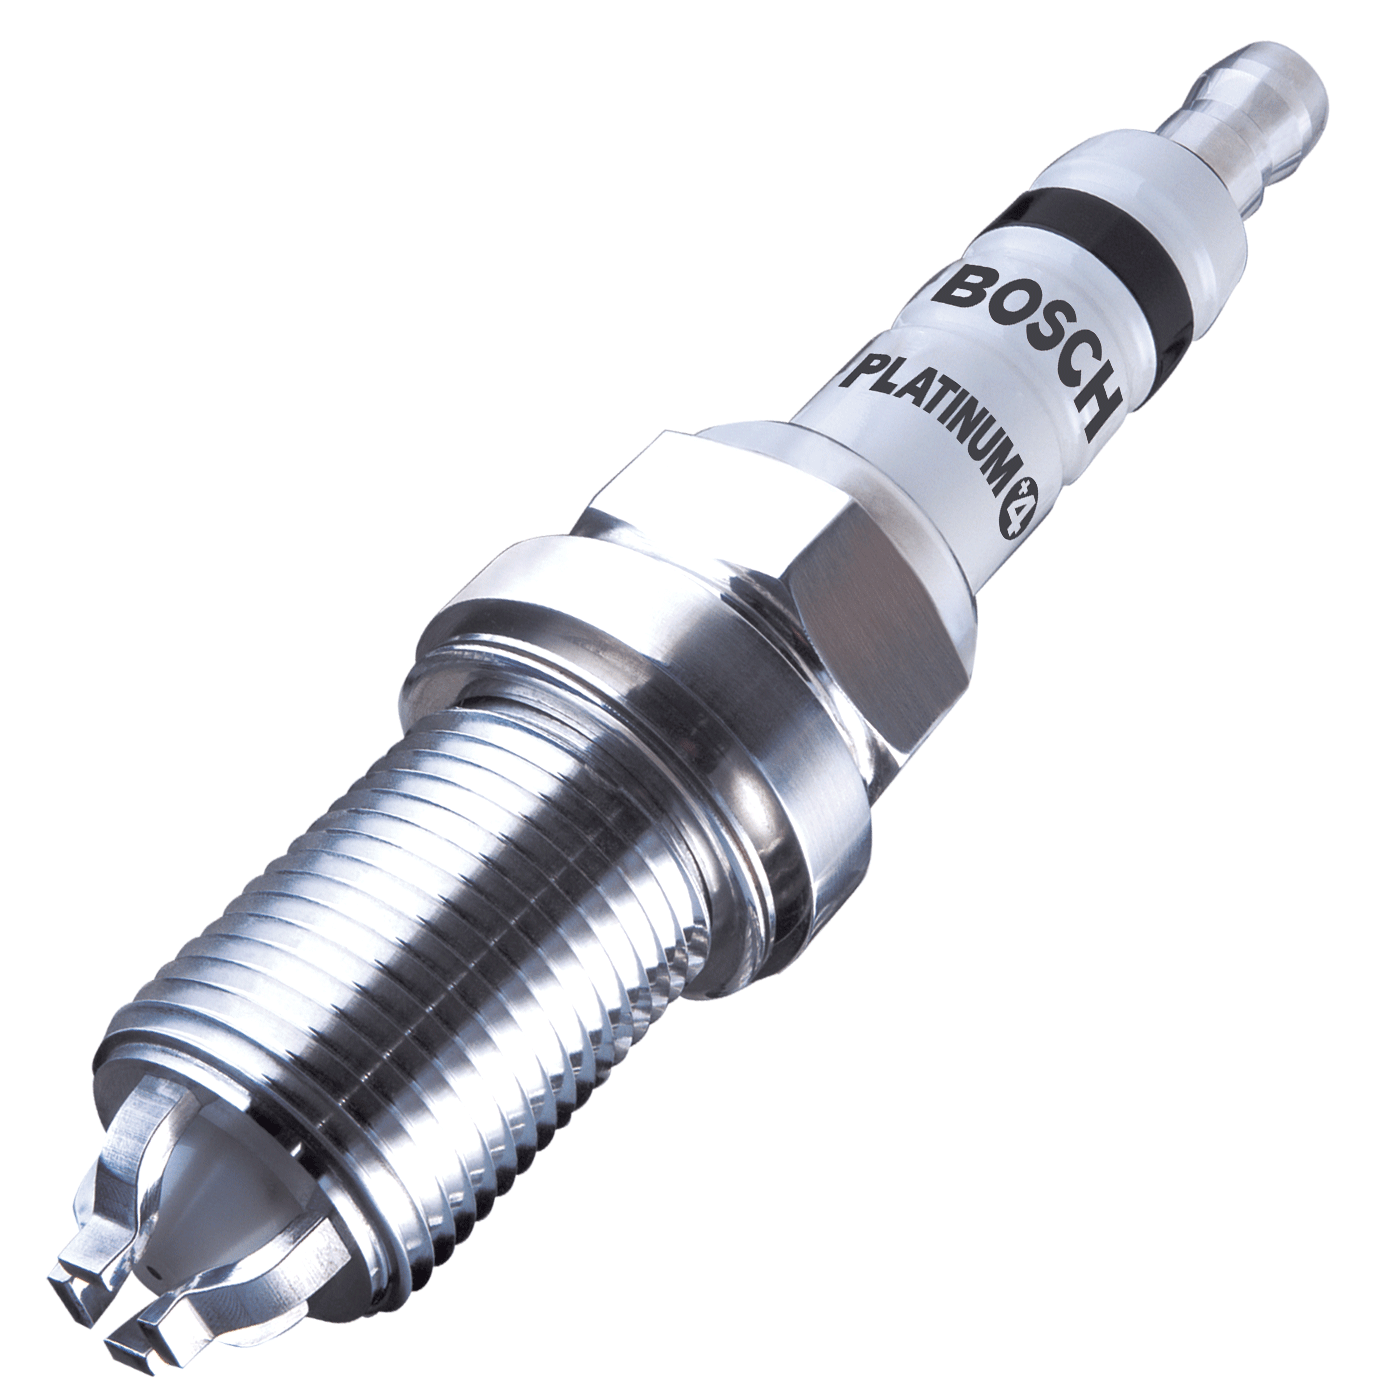 Platinum+4 Spark Plugs | Bosch Auto Parts